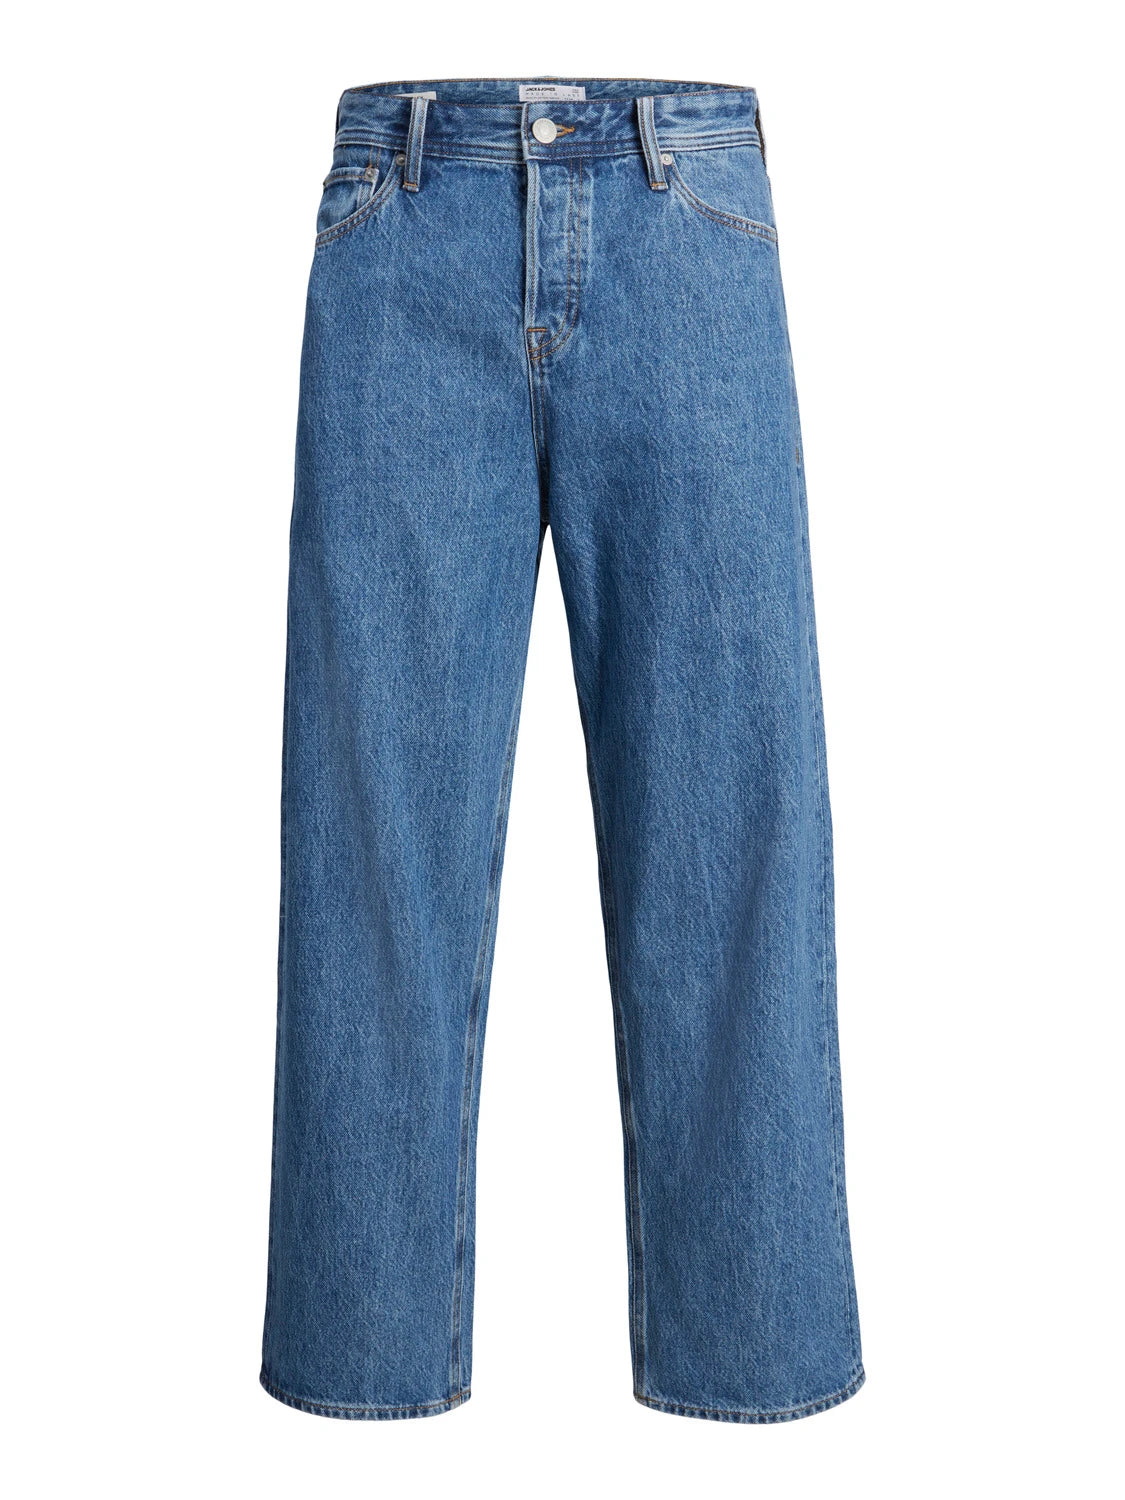 Jack & Jones | ALEX ORIGINAL - Baggy Fit Jeans  | SBD 301 usedwashed